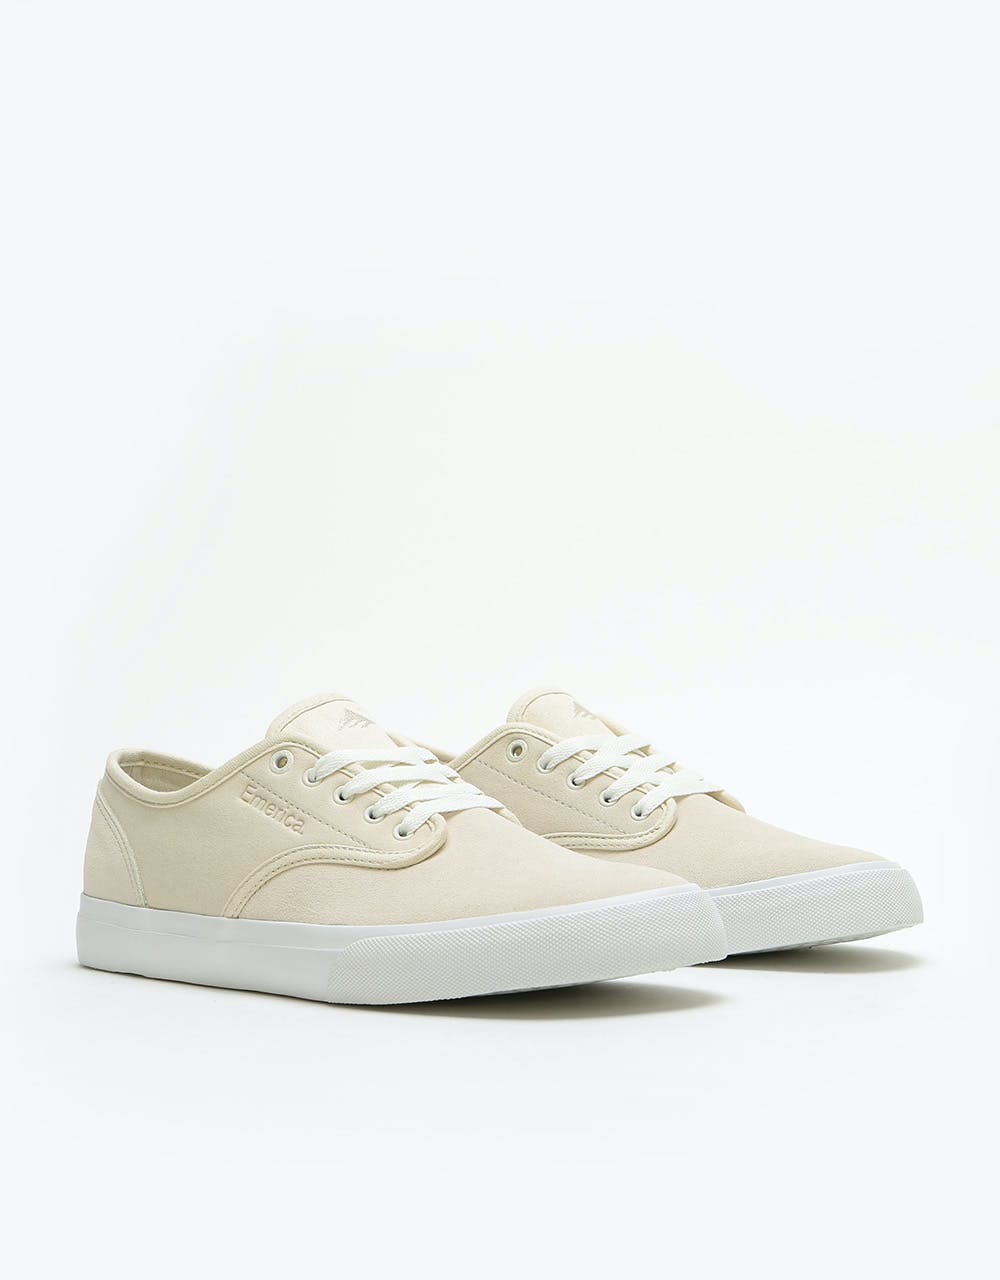 Emerica Wino Standard Skate Shoes - White/2-Tone